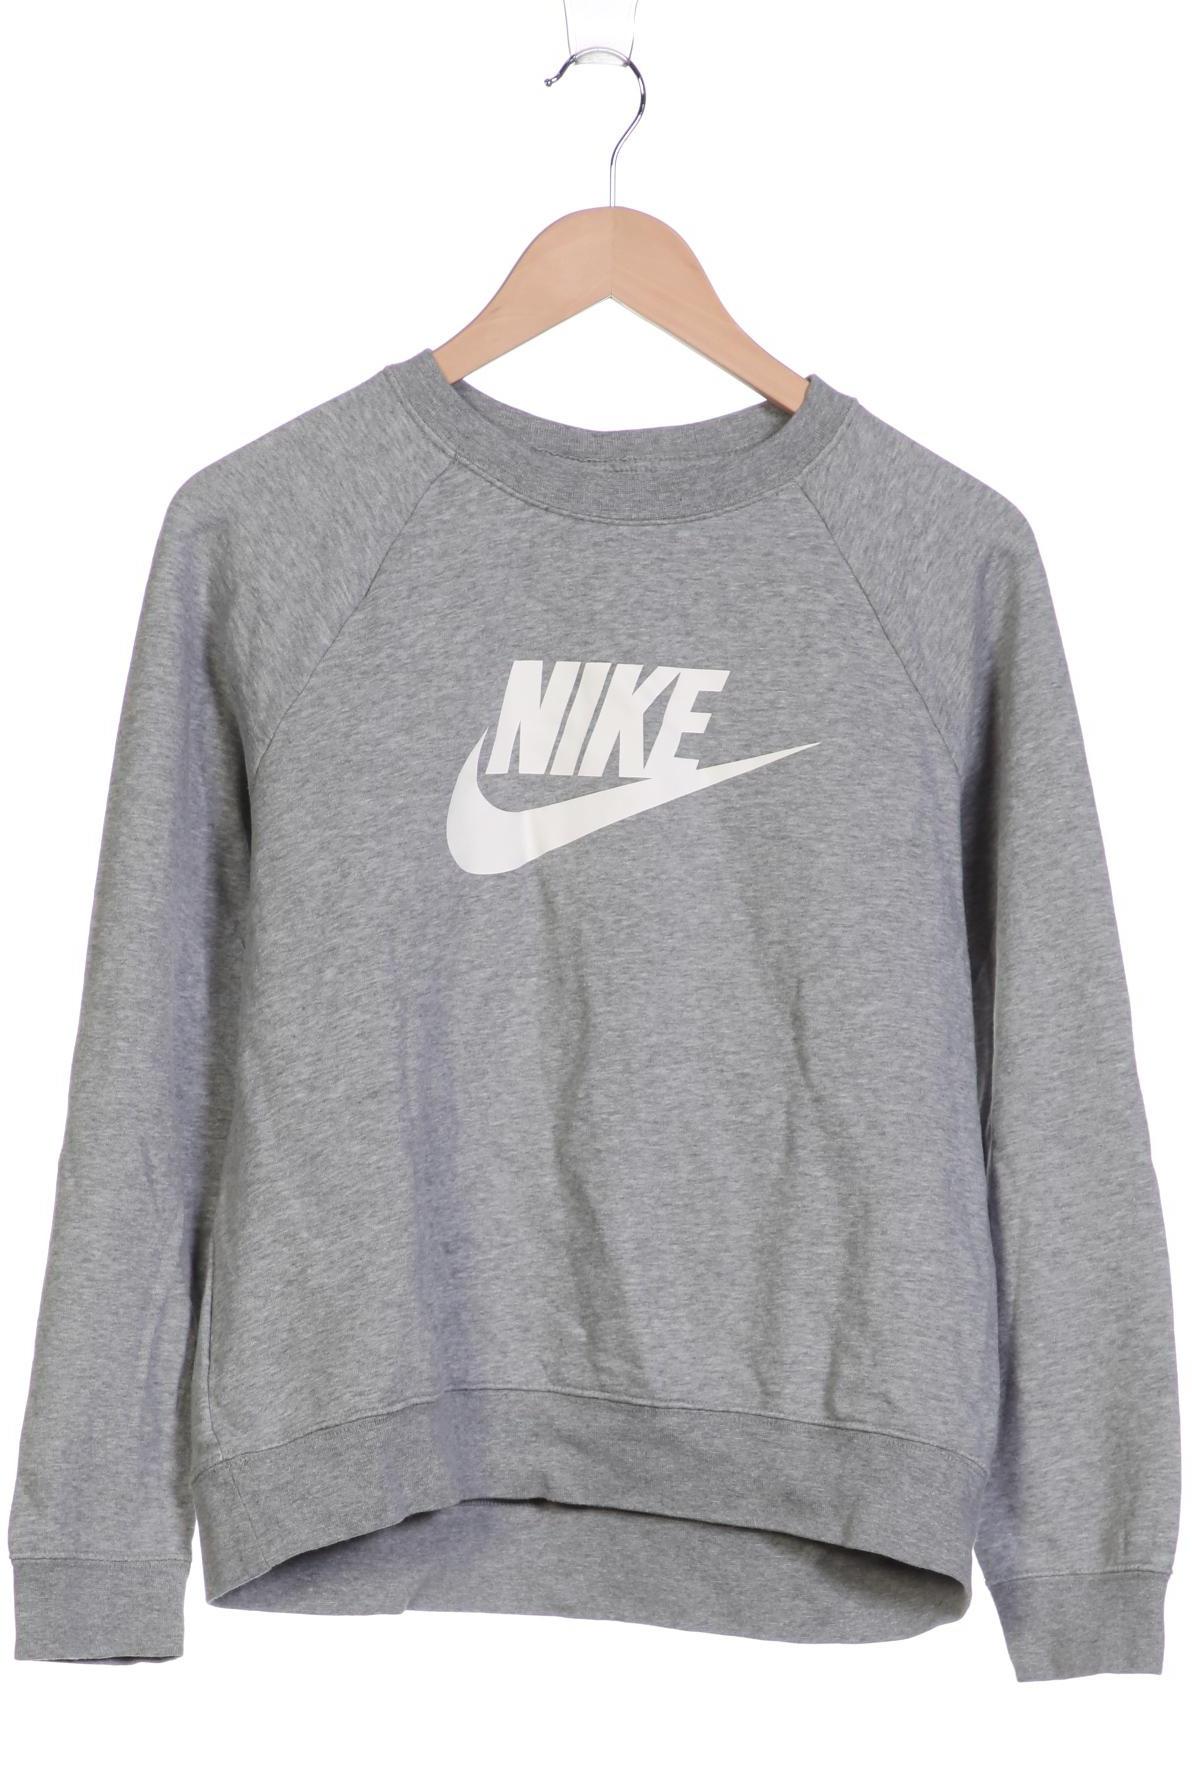 Nike Damen Sweatshirt, grau, Gr. 38 von Nike